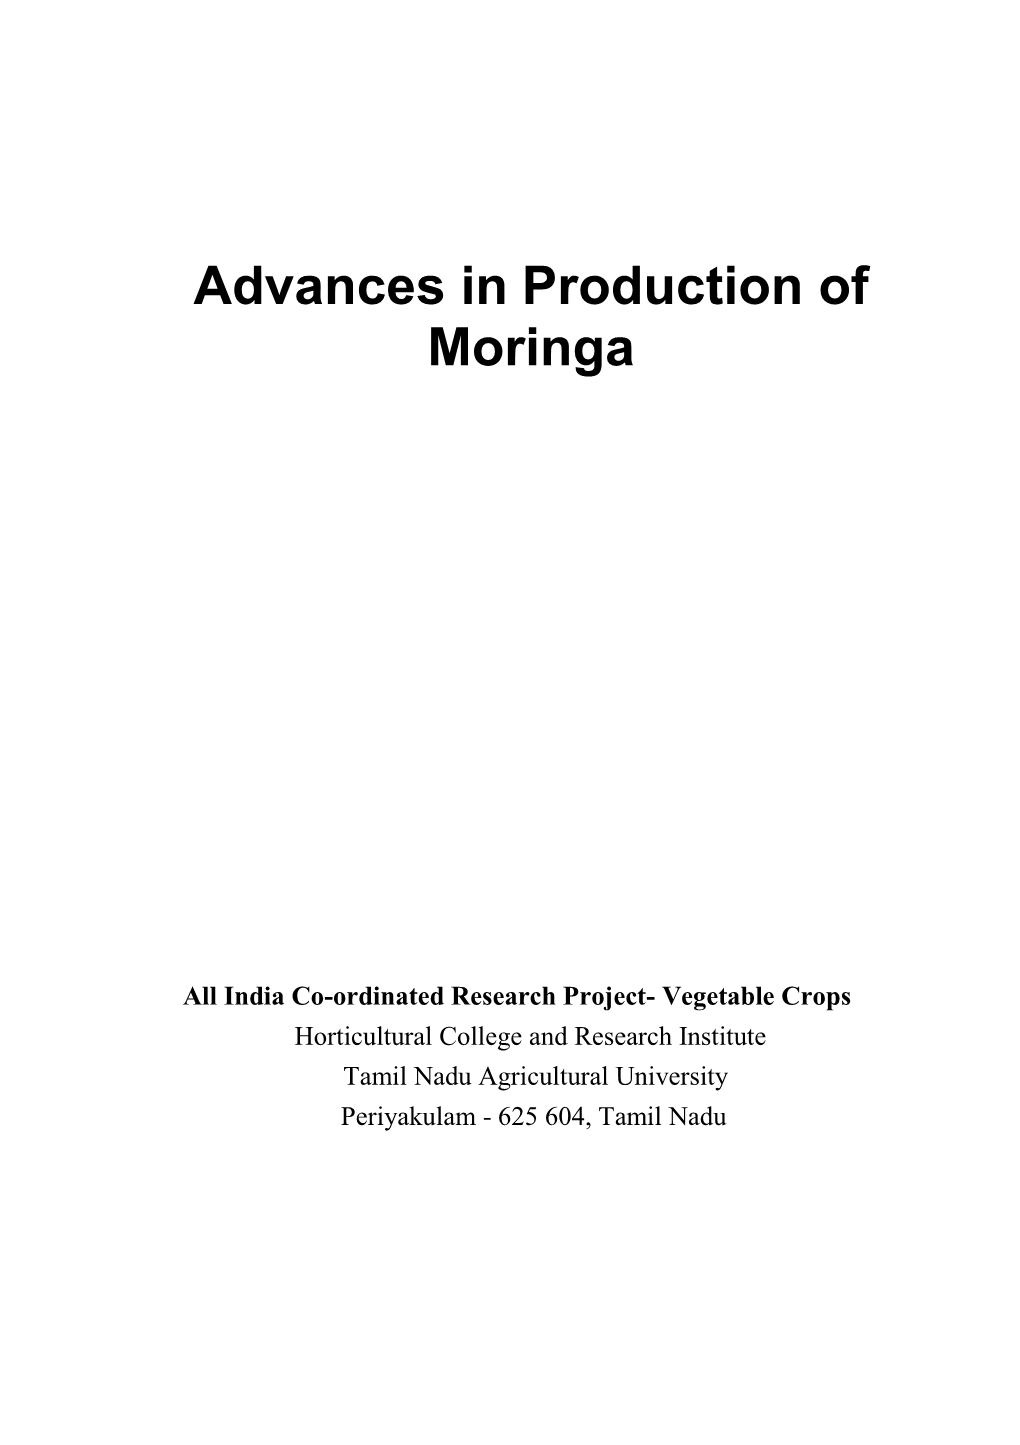 Advances in Production of Moringa